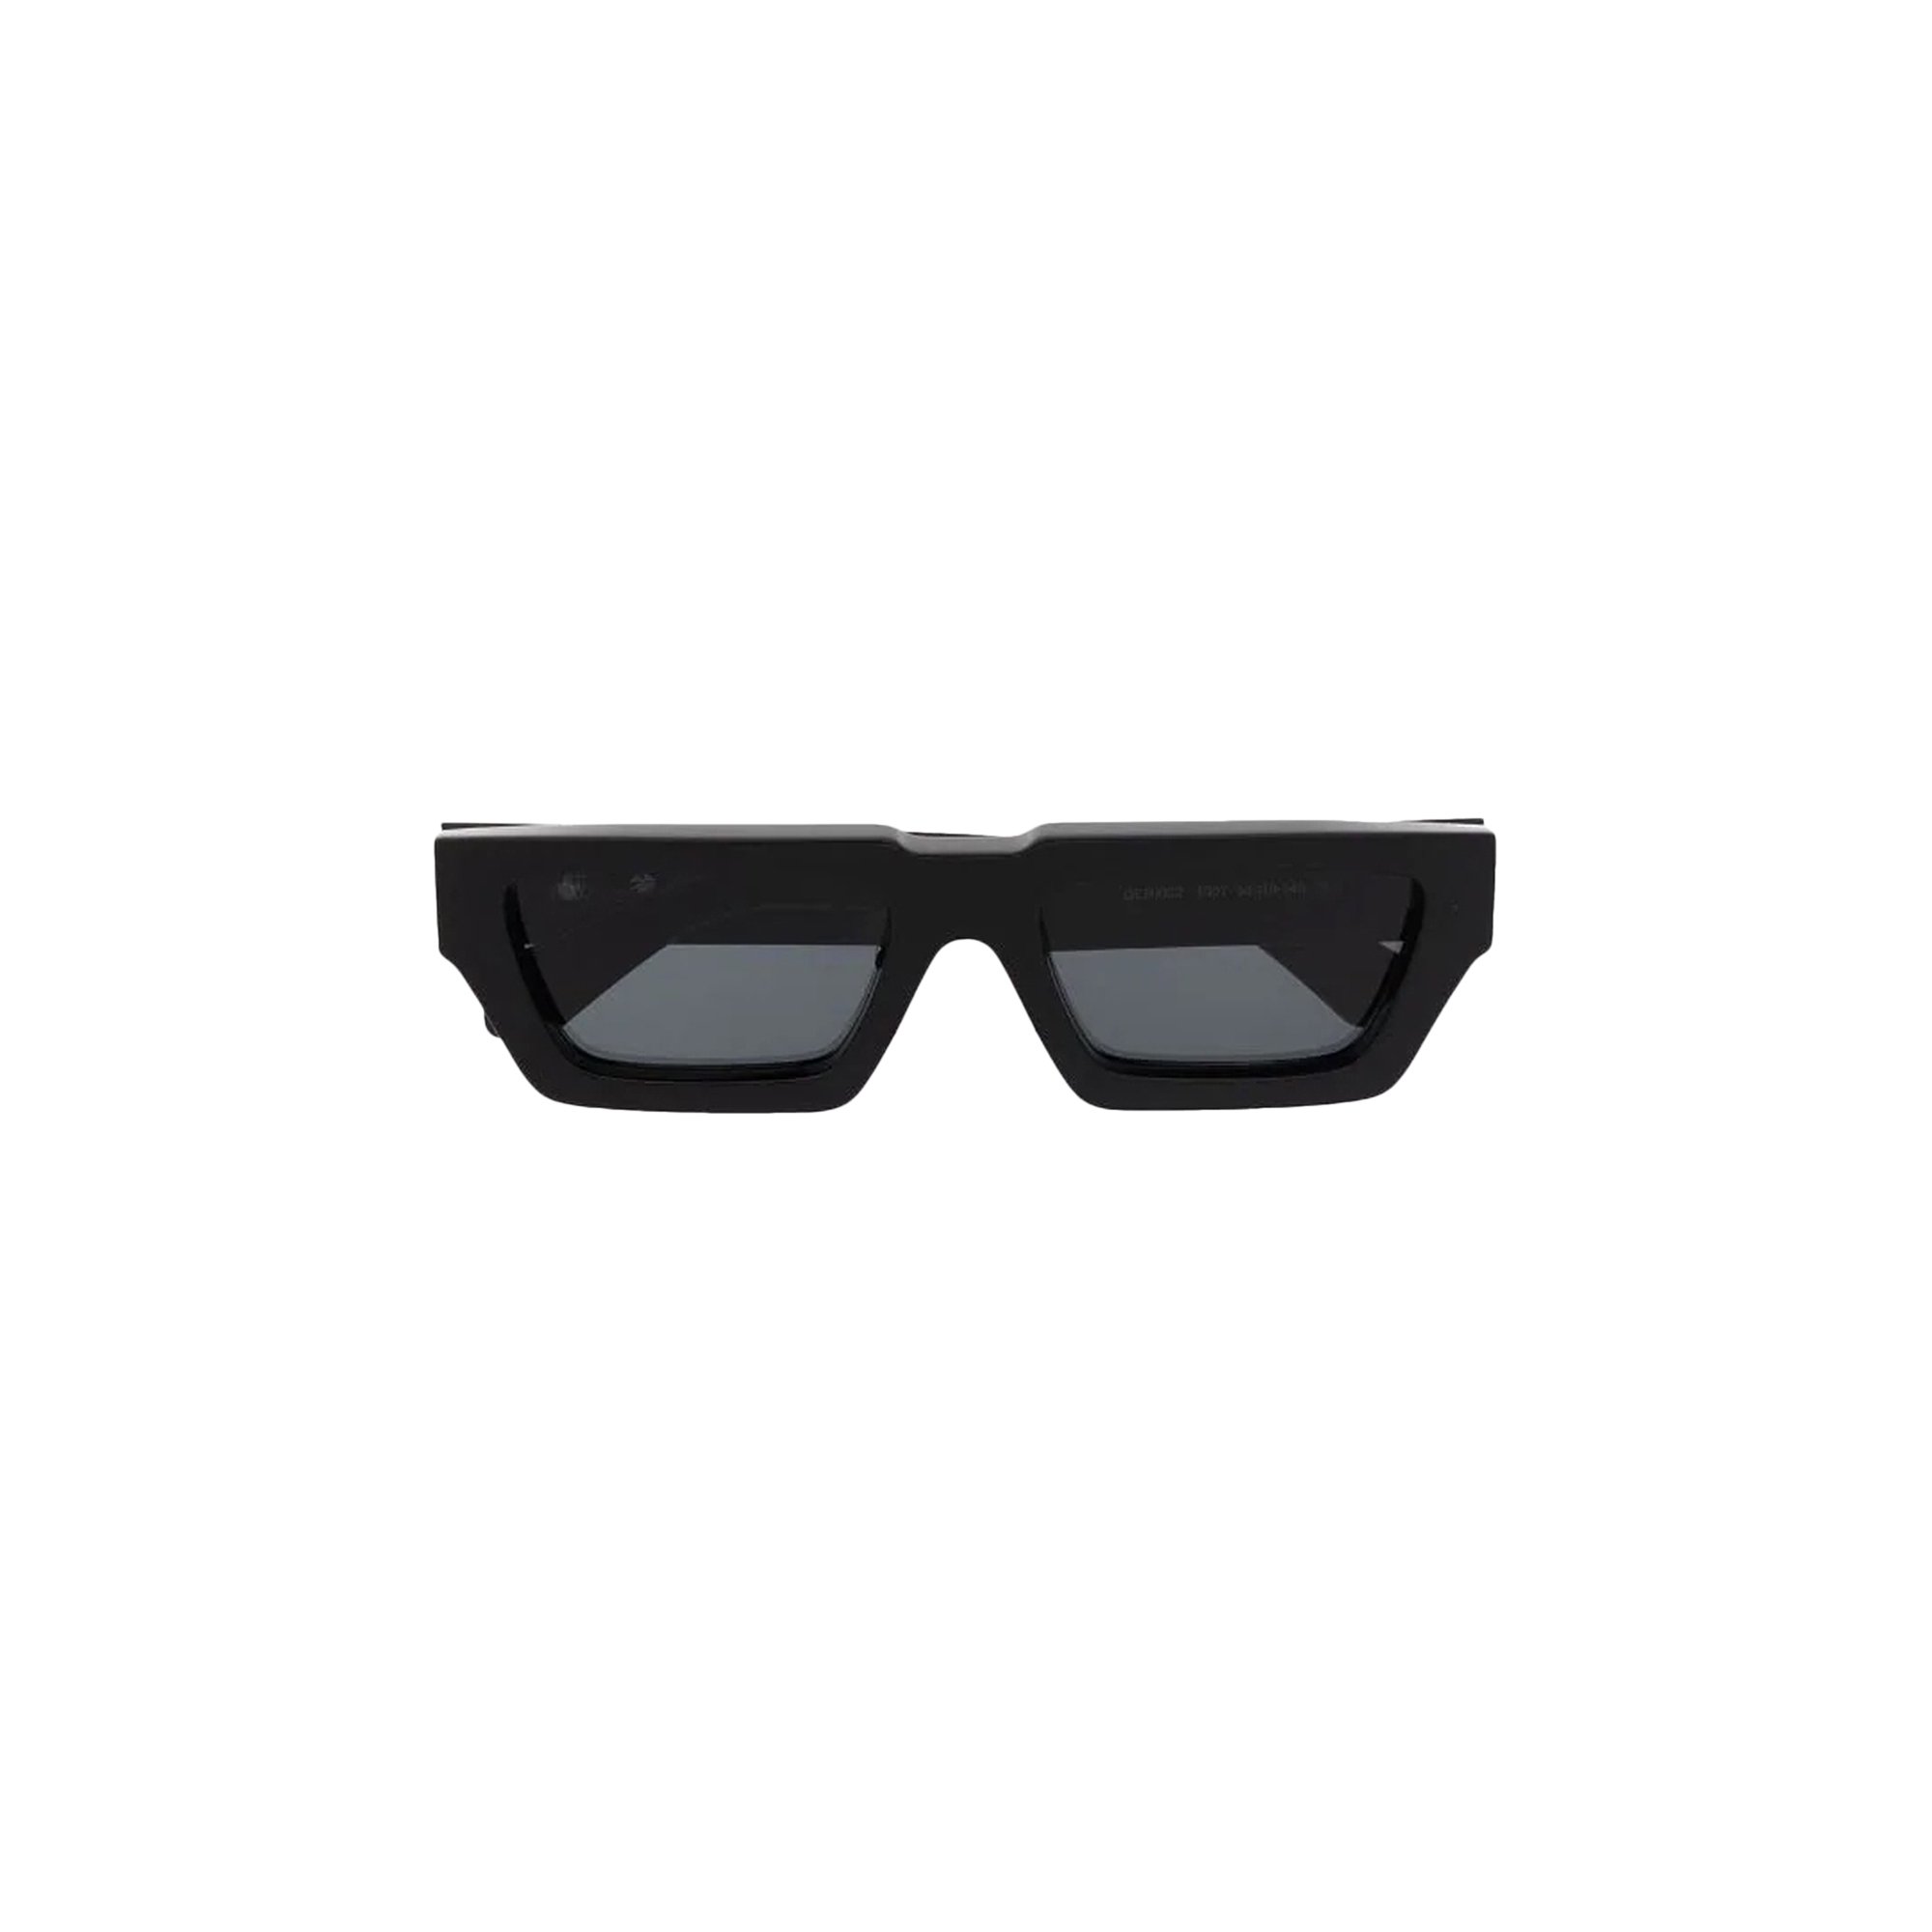 Buy Off-White Manchester Sunglasses 'Black/Dark Grey